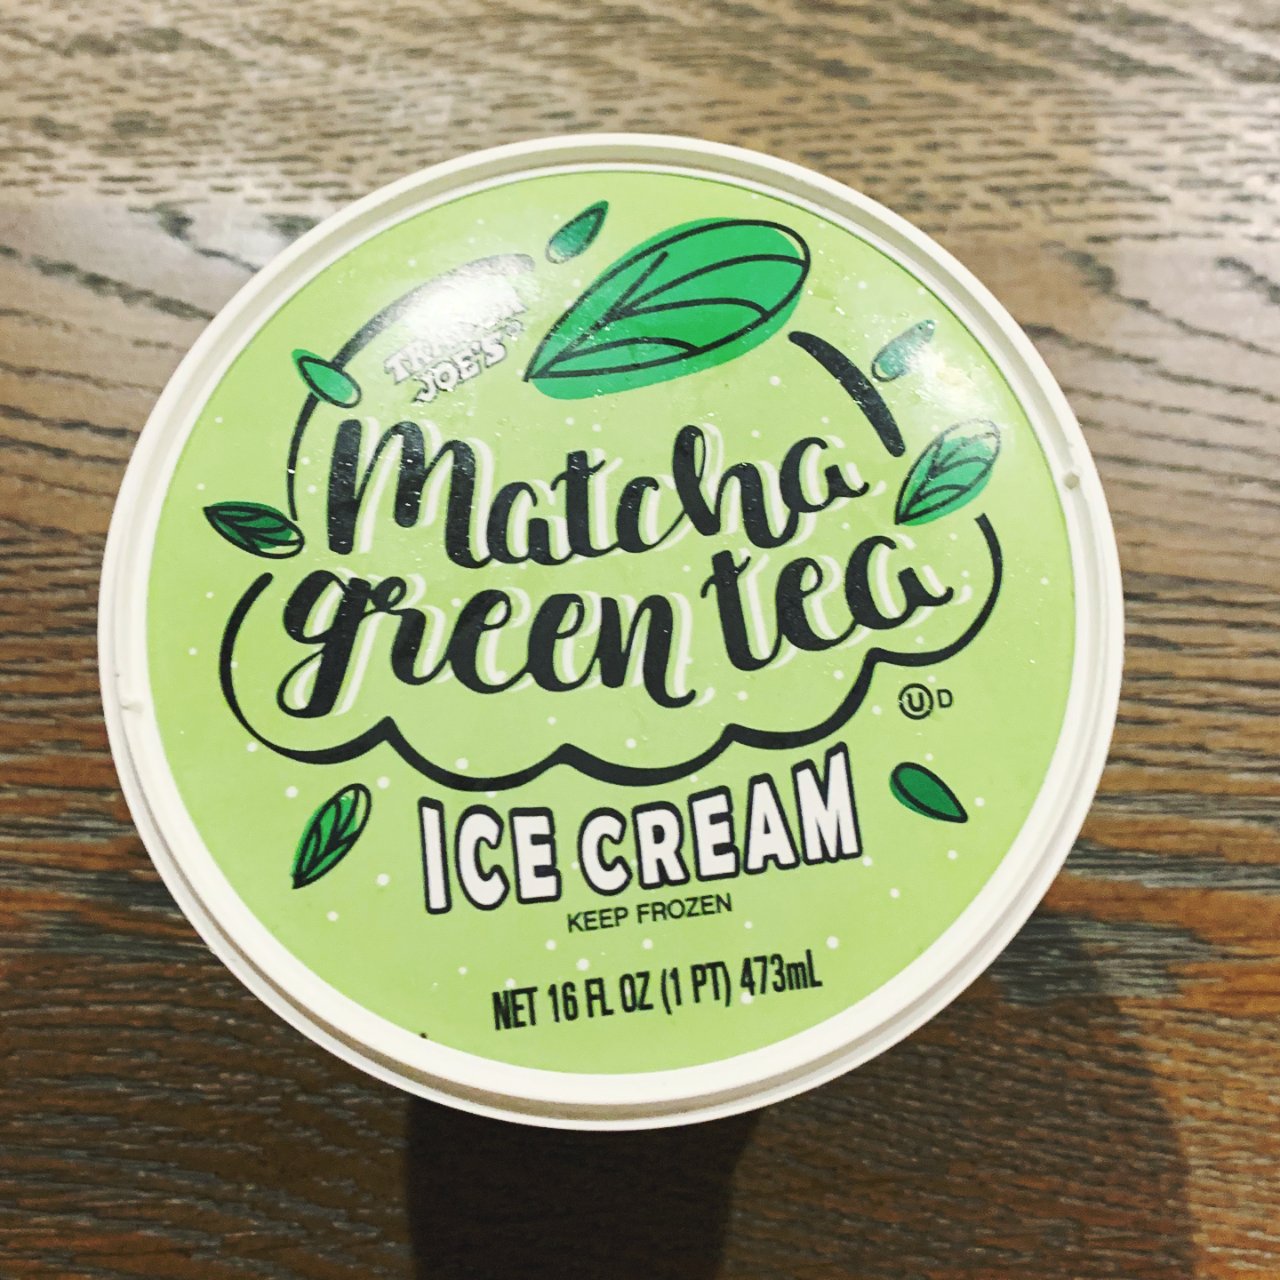 Matcha green tea ice...